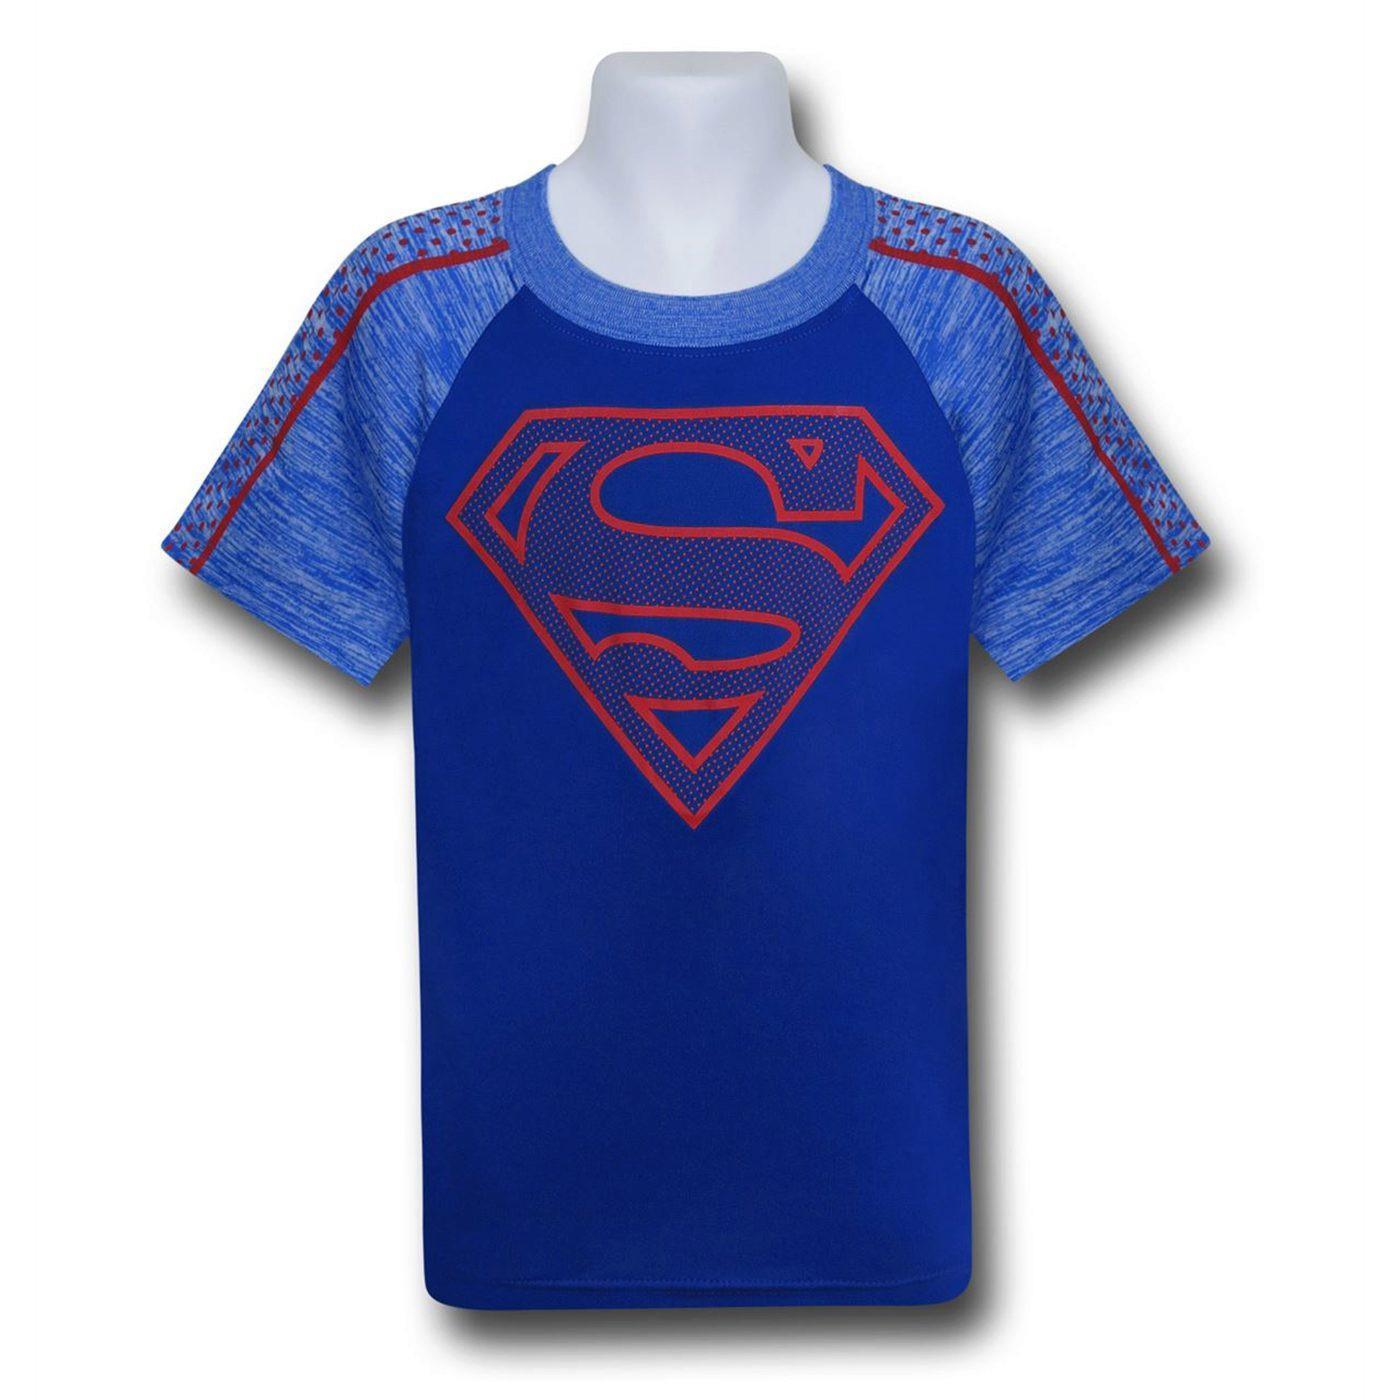 Superman Kids Symbol on Blue Space Dye T-Shirt Size 5-6